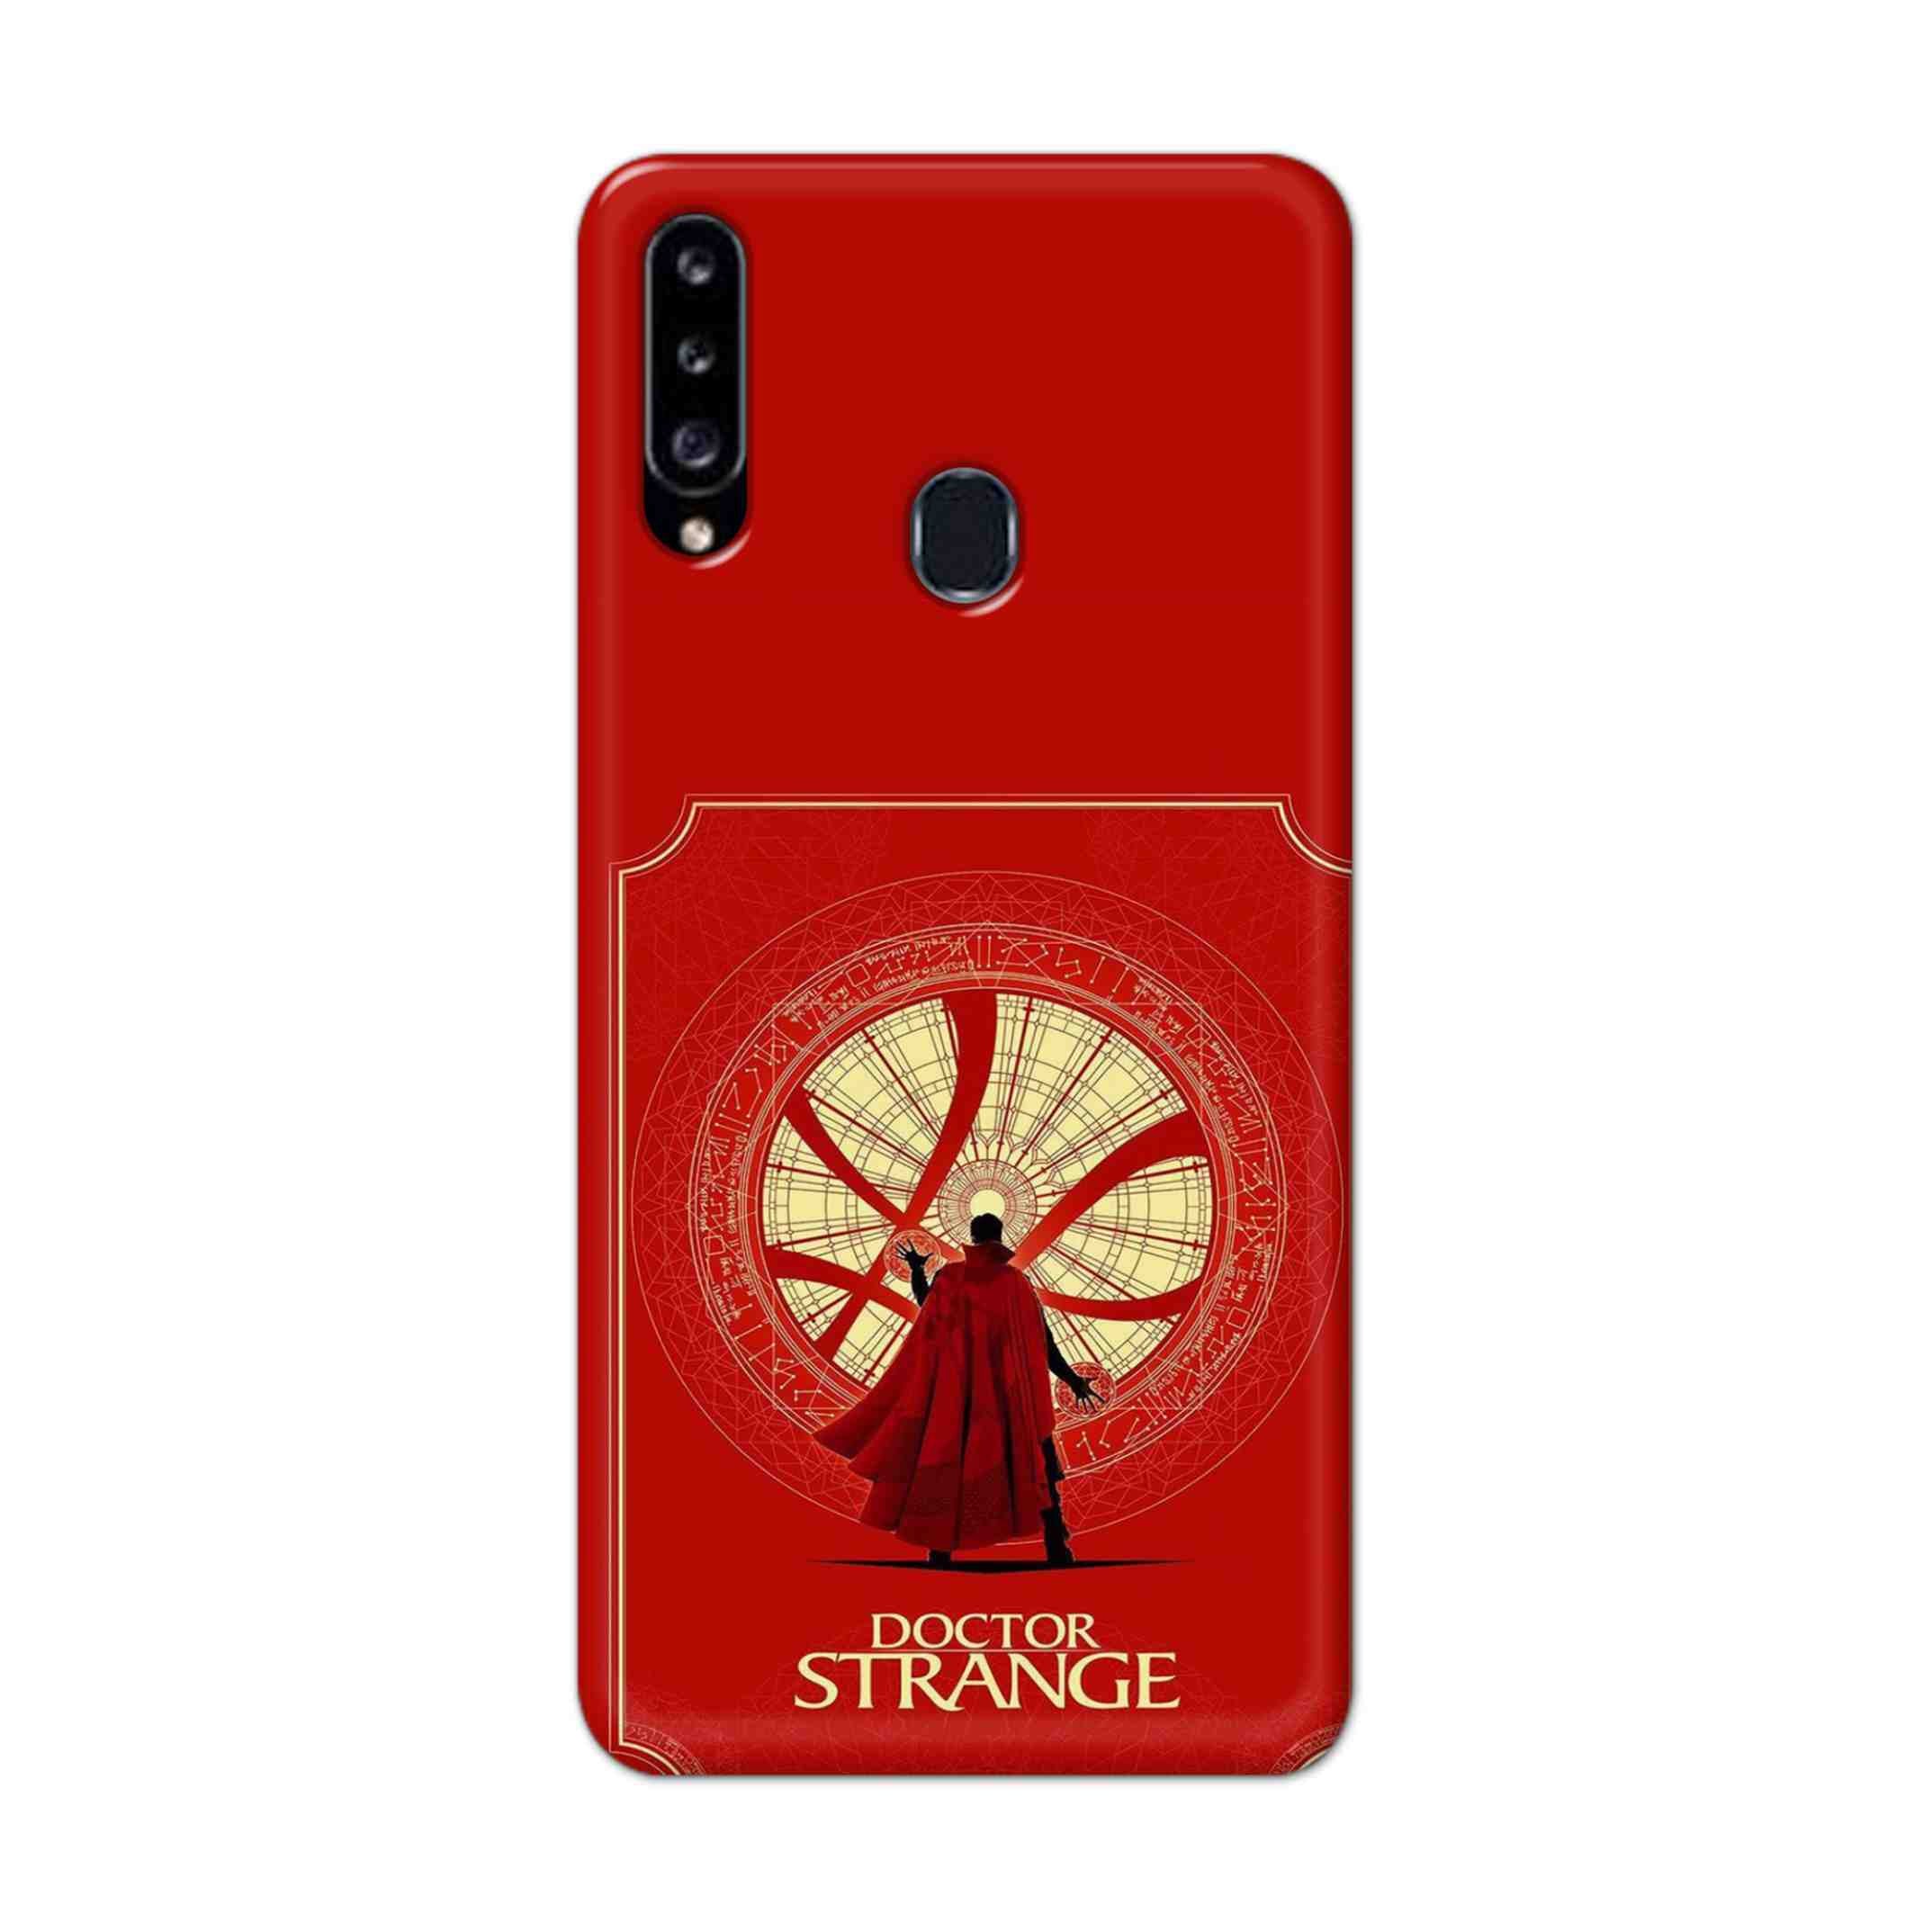 Buy Blood Doctor Strange Hard Back Mobile Phone Case Cover For Samsung Galaxy A21 Online